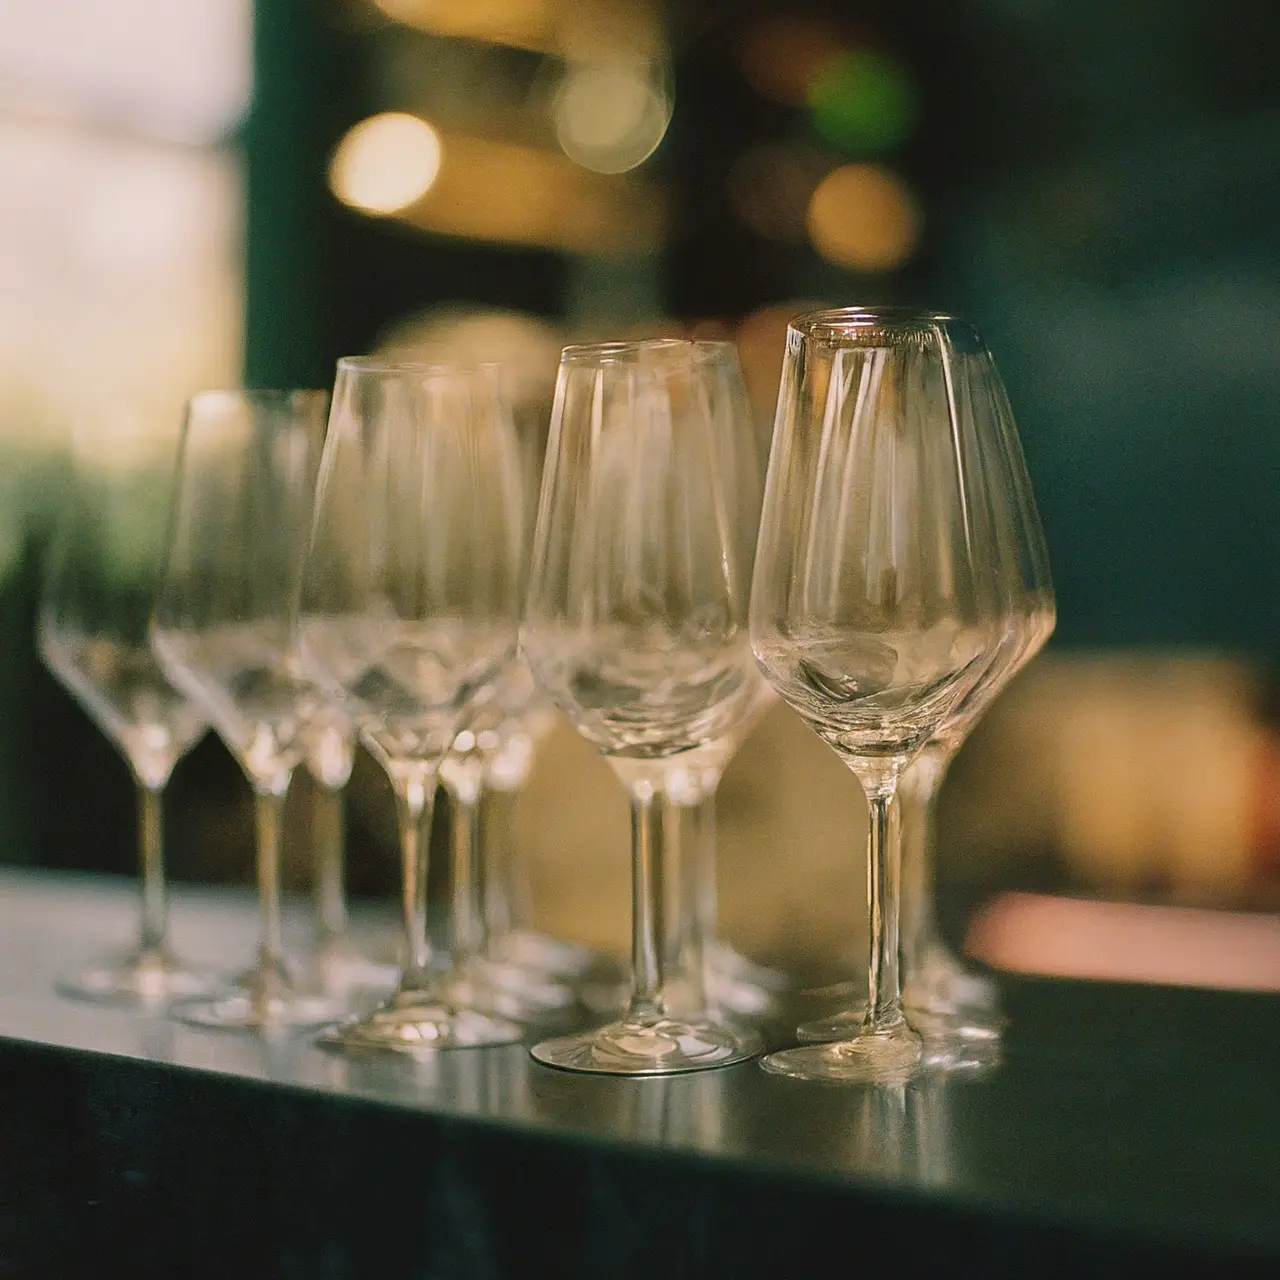 Elegant highball glasses arranged on a sleek bar counter. 35mm stock photo